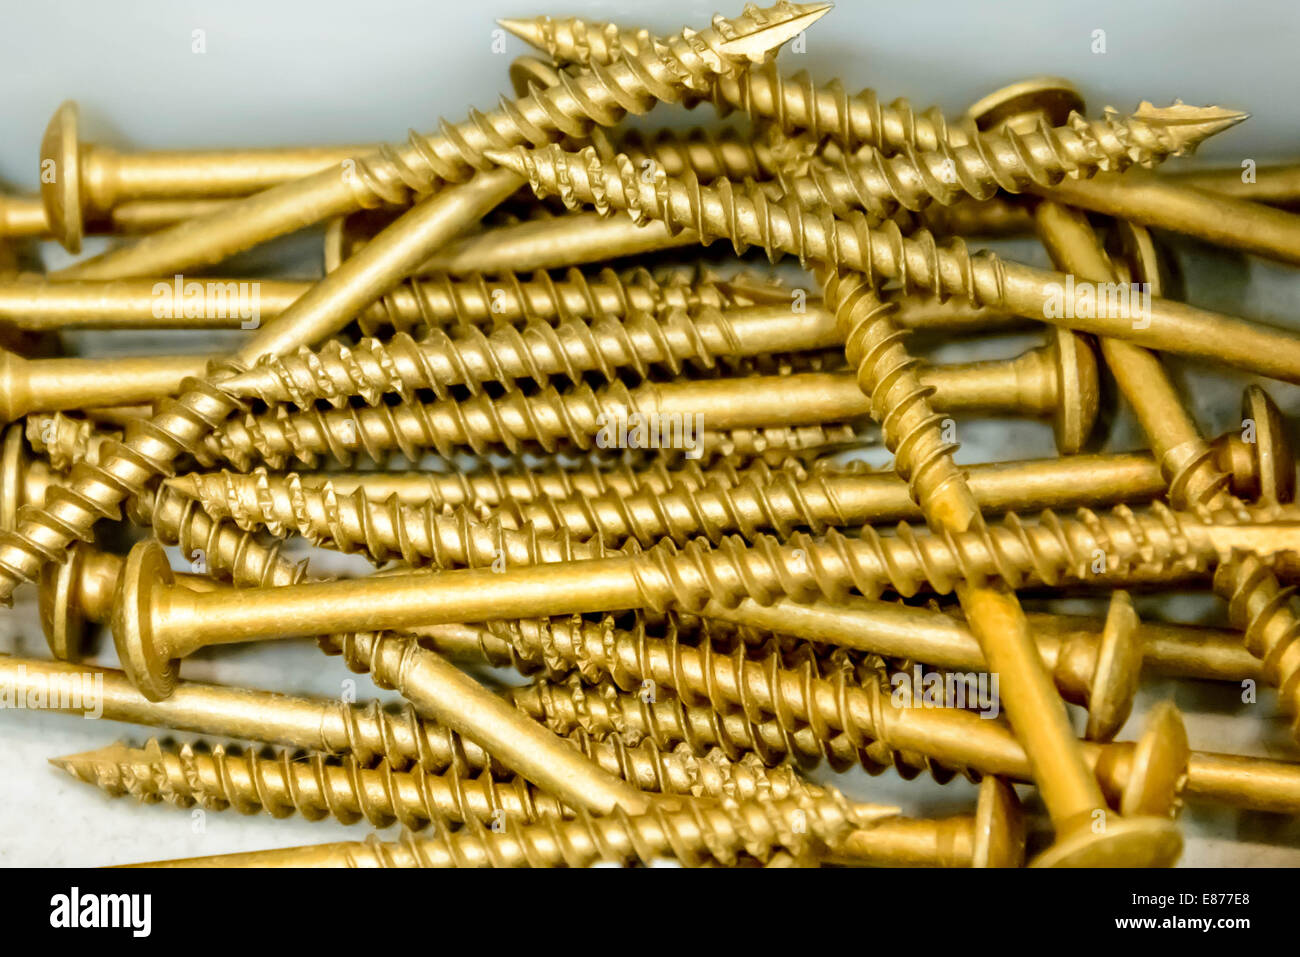 building supplies, copper screws Stock Photo